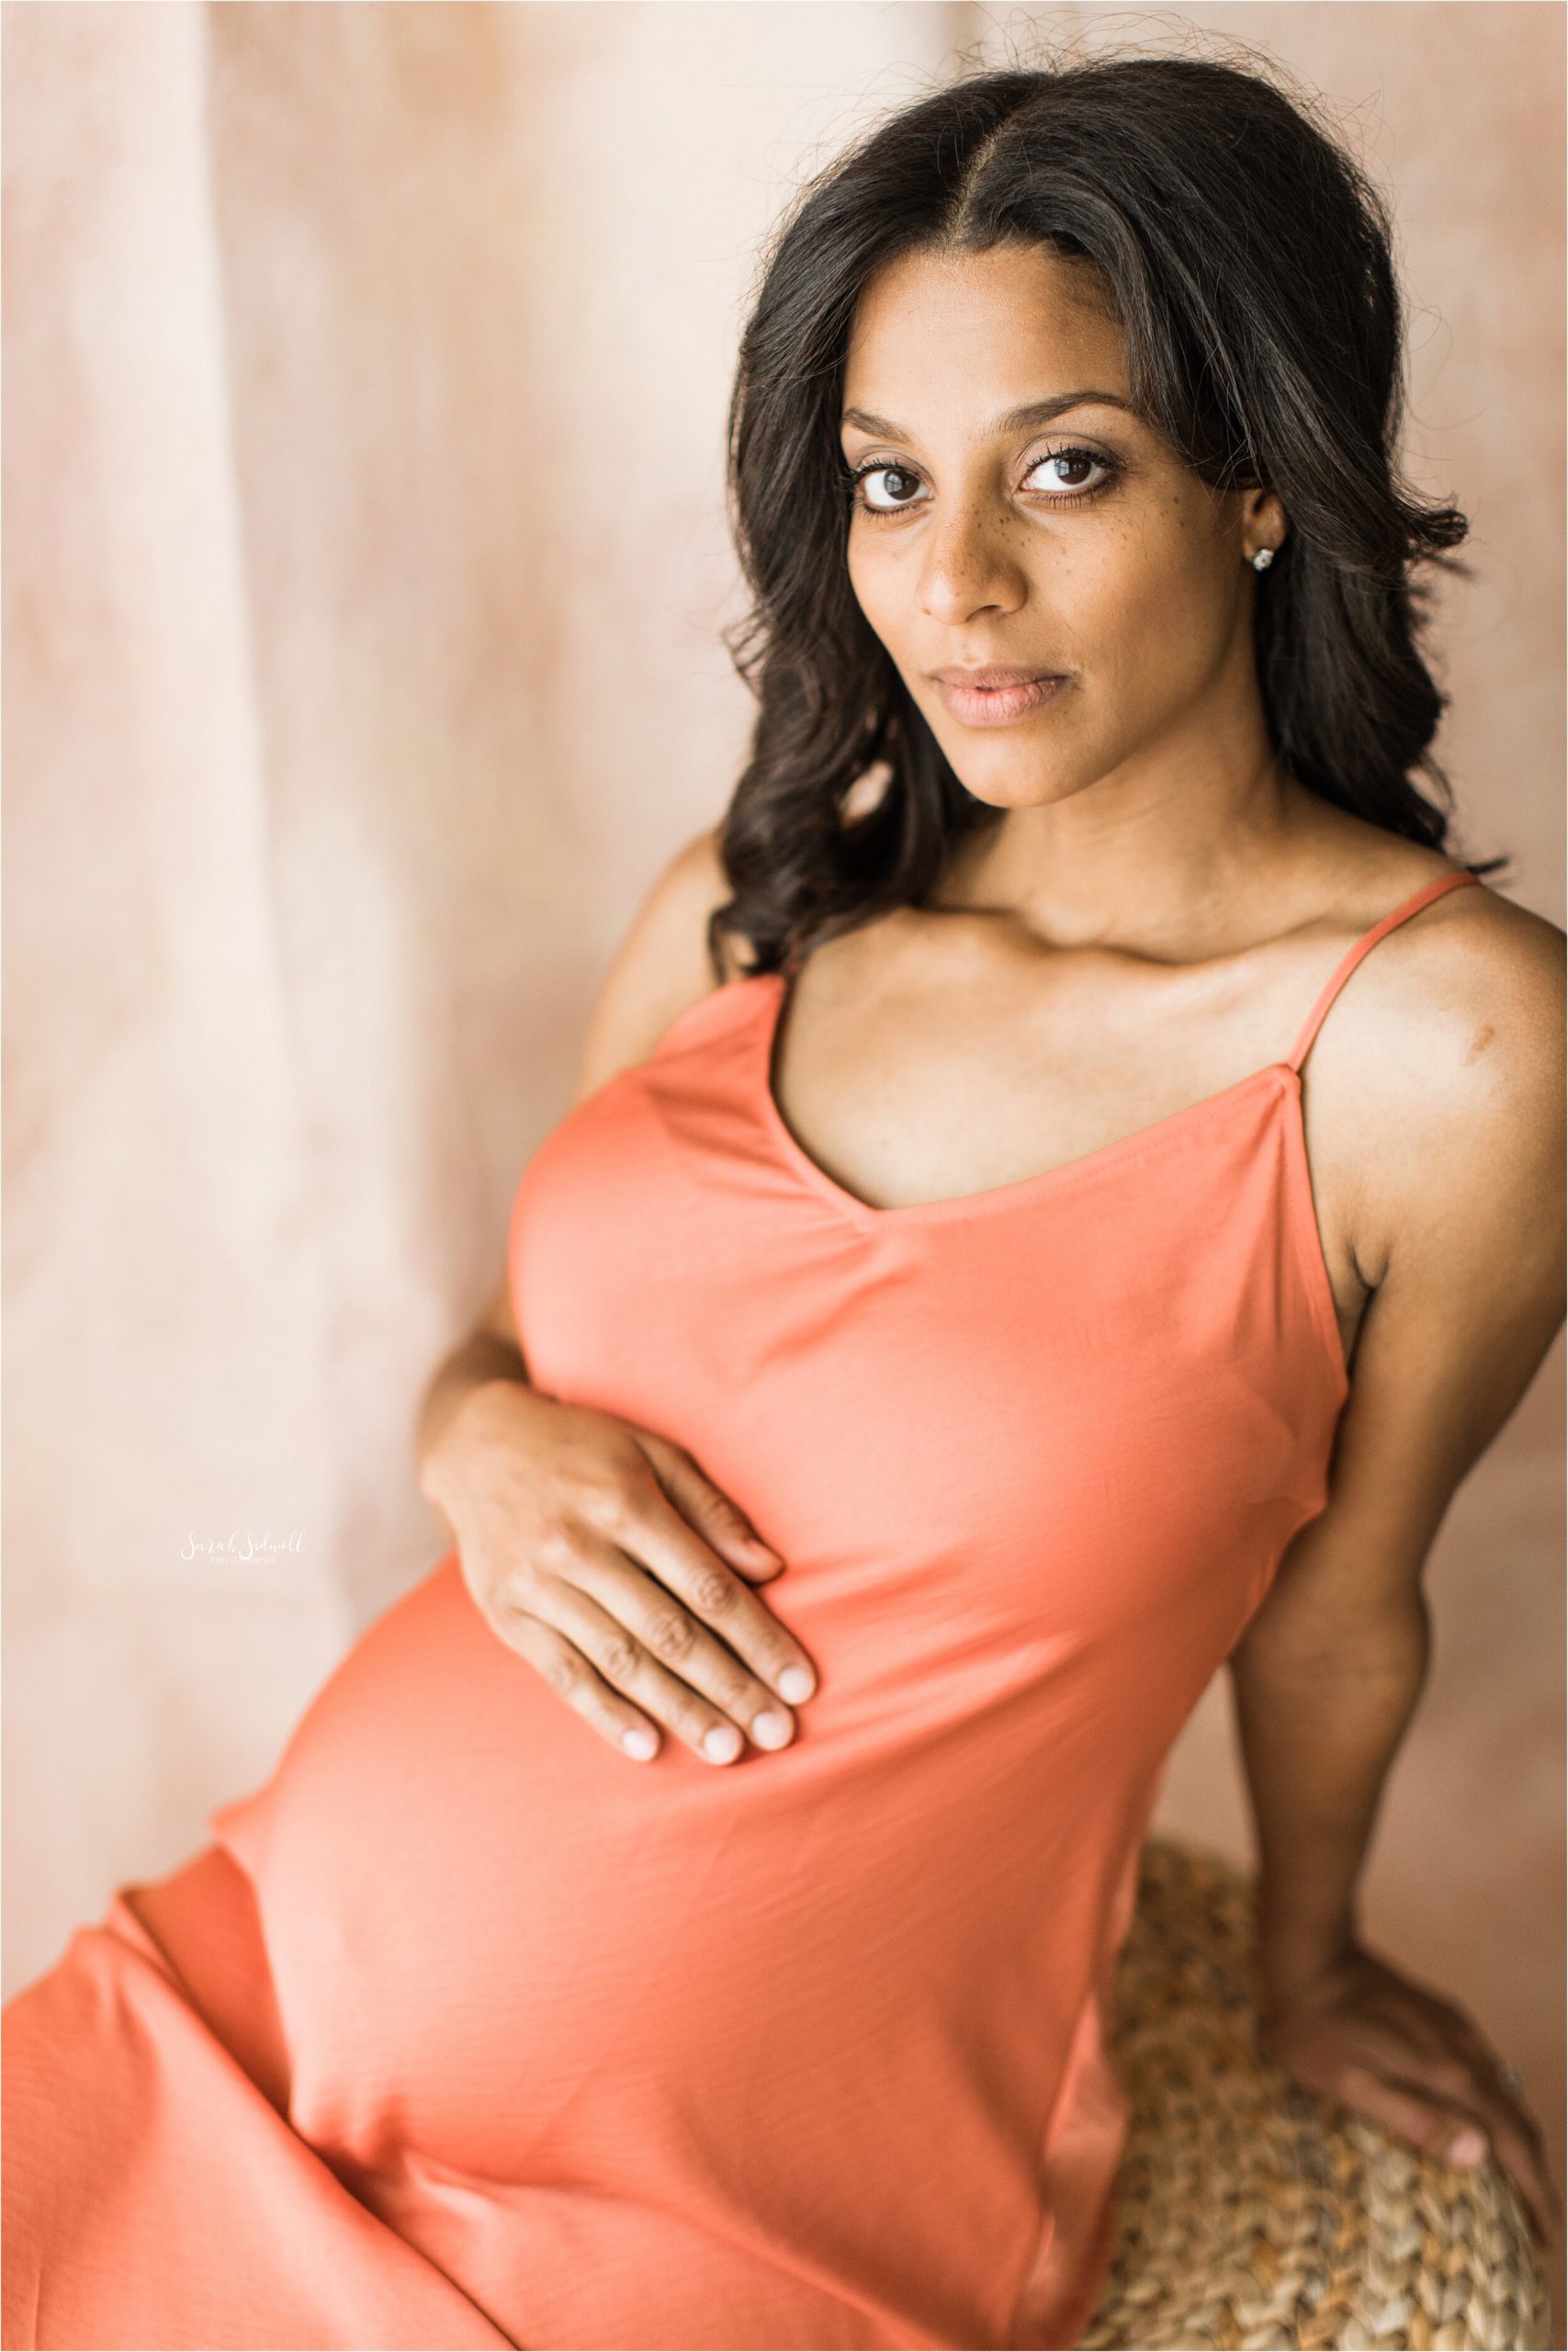 Soniah Materinty | Classic Studio Maternity Photos